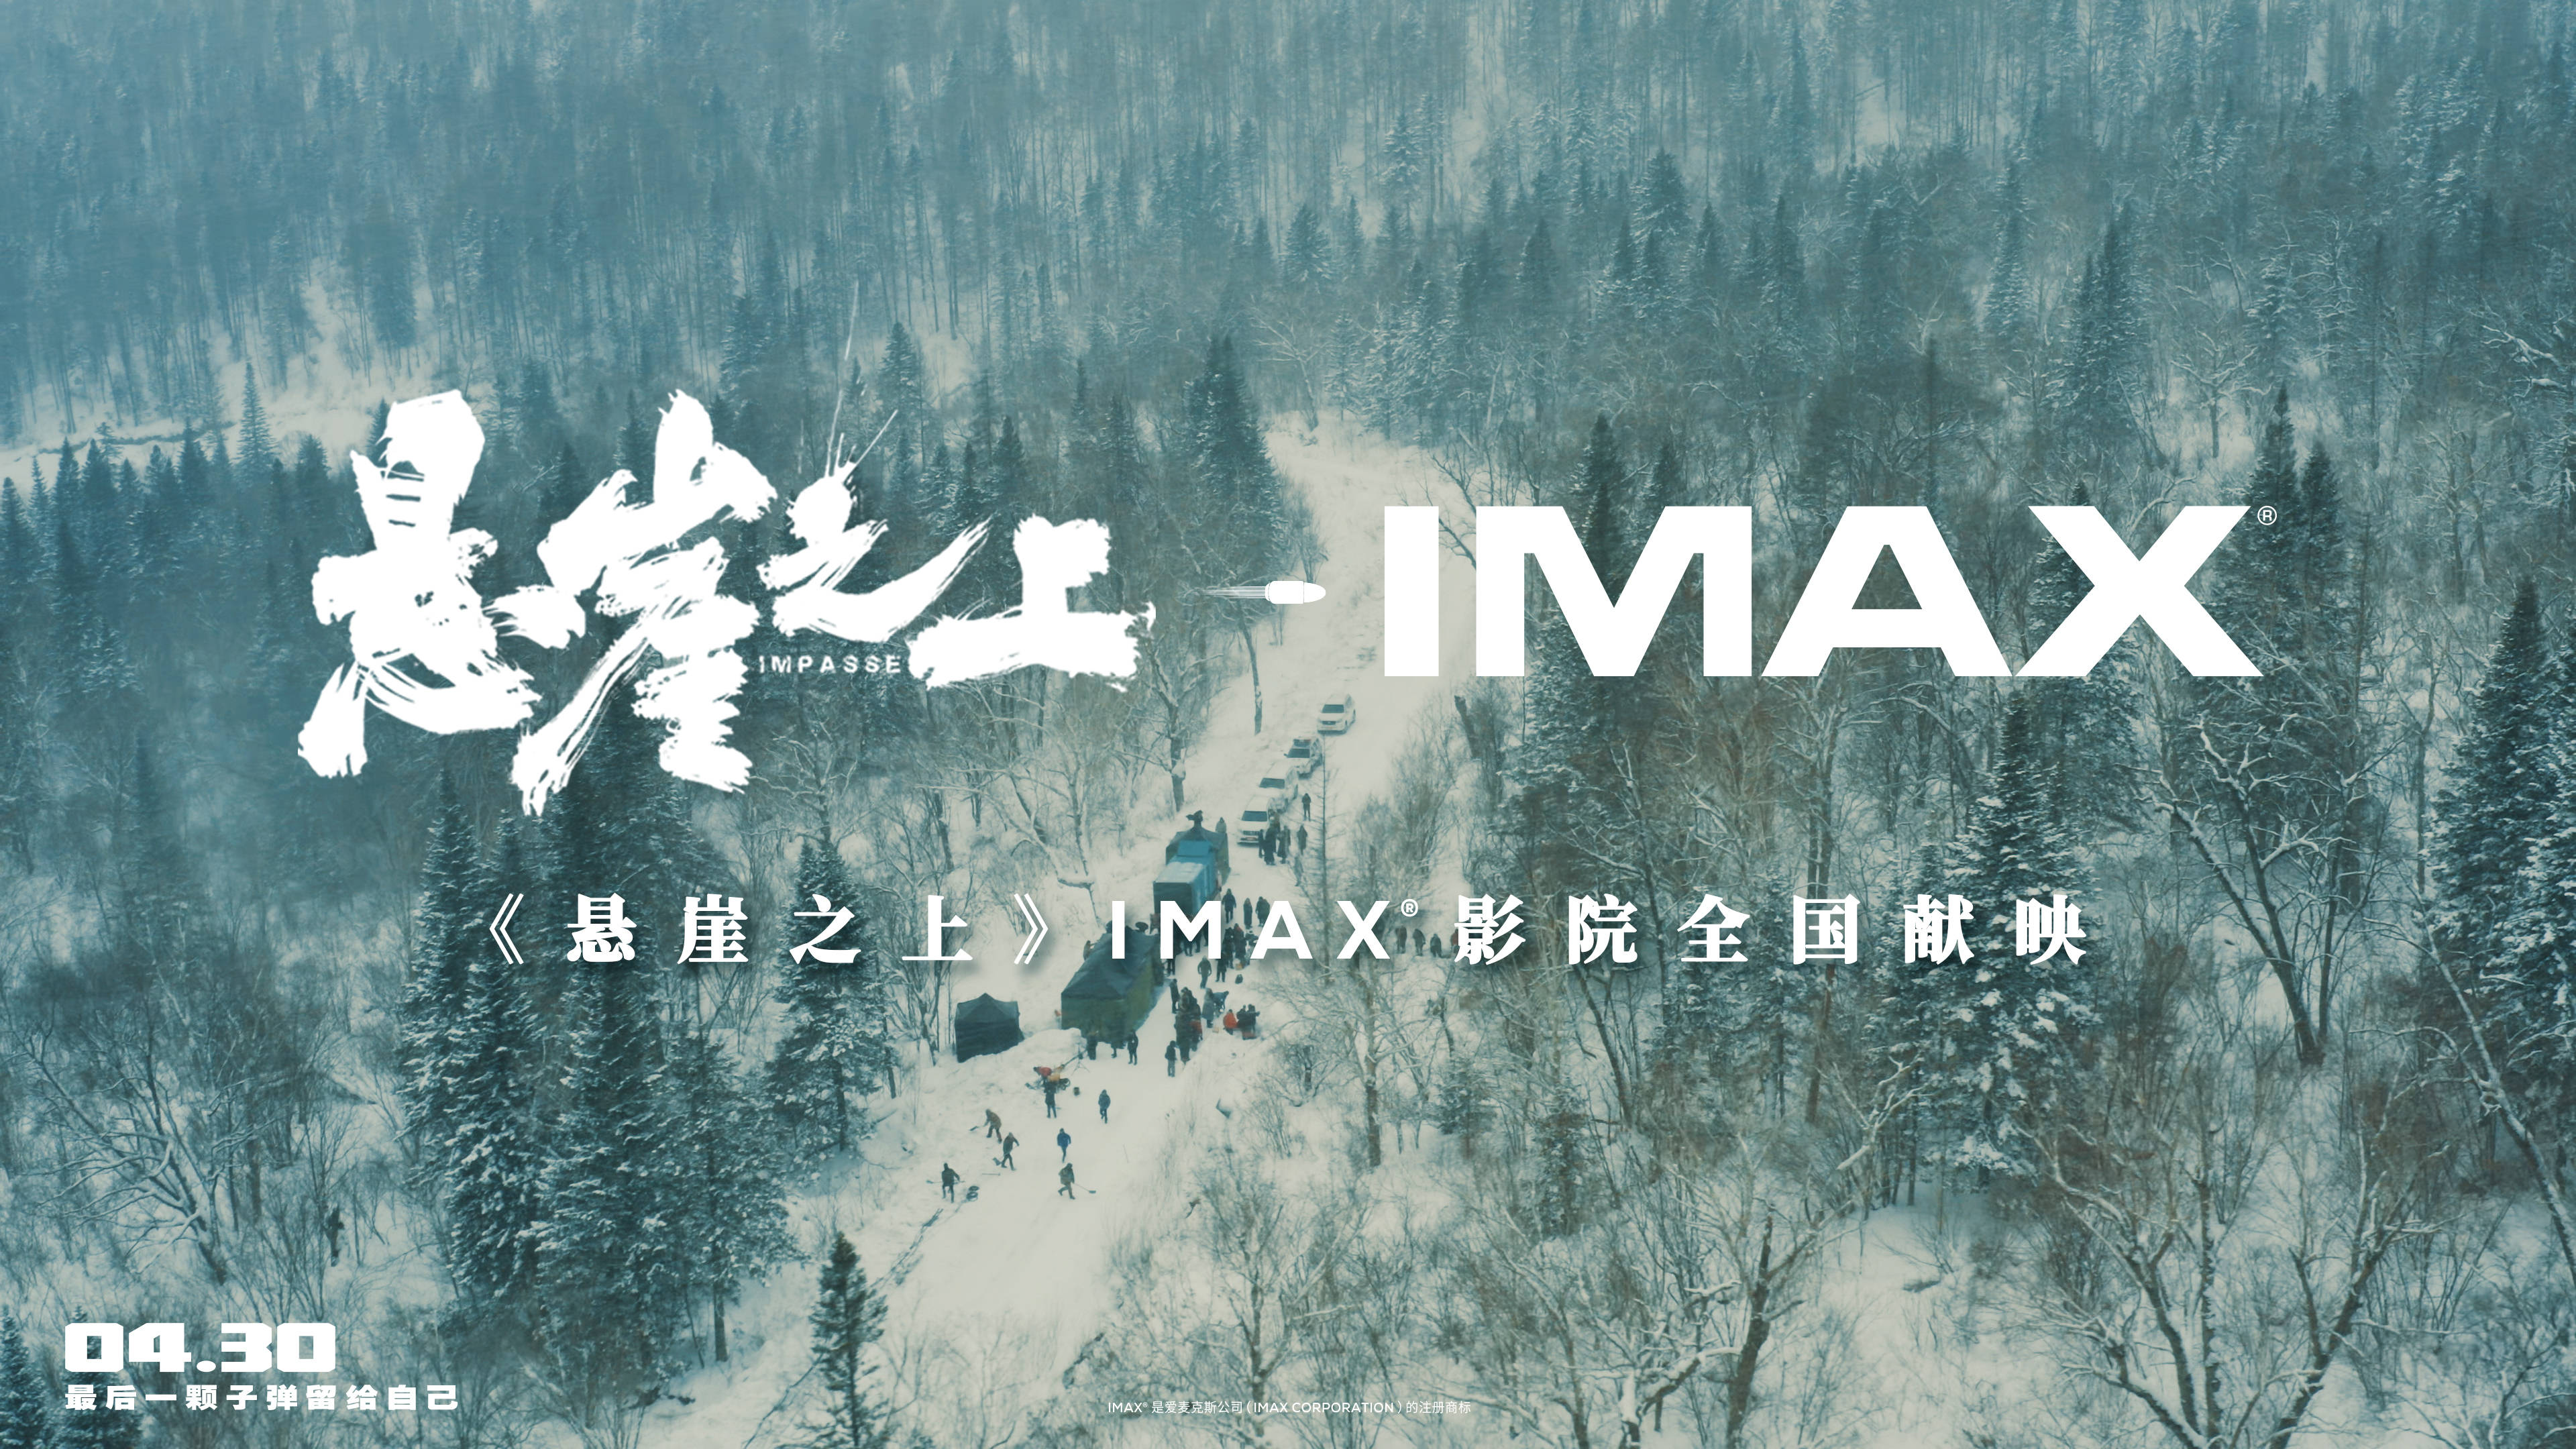 IMAX发布《悬崖之上》主创特辑 张译秦海璐朱亚文邀你亲临冰城迷局